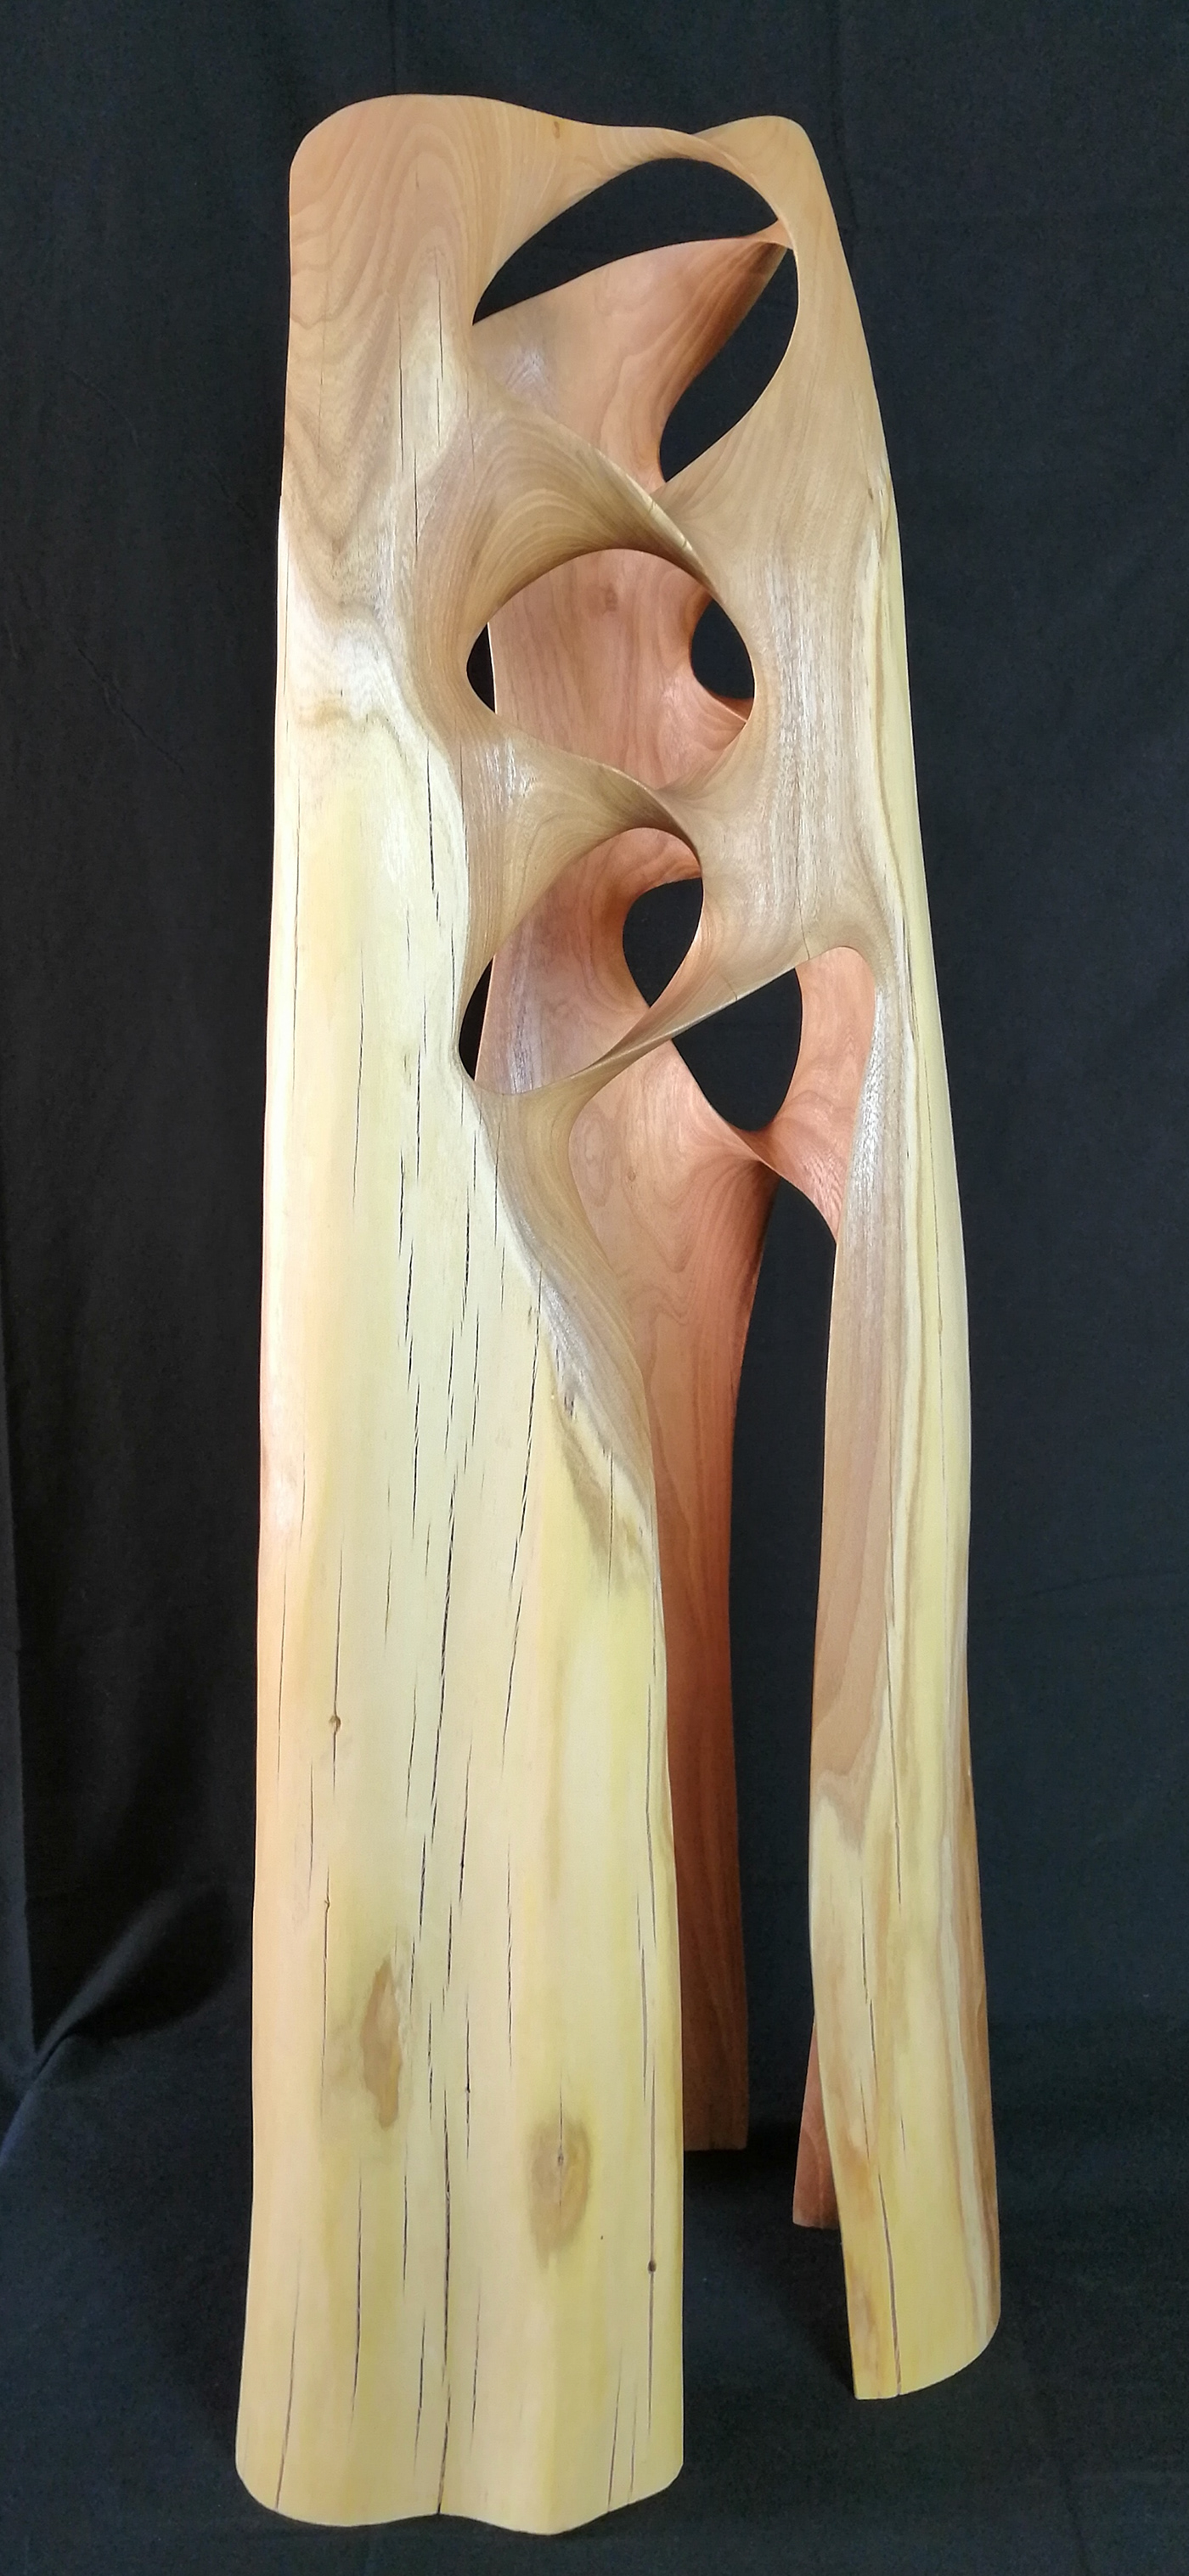 wood woodcarving sculpture madera Fusta  talla wood working 